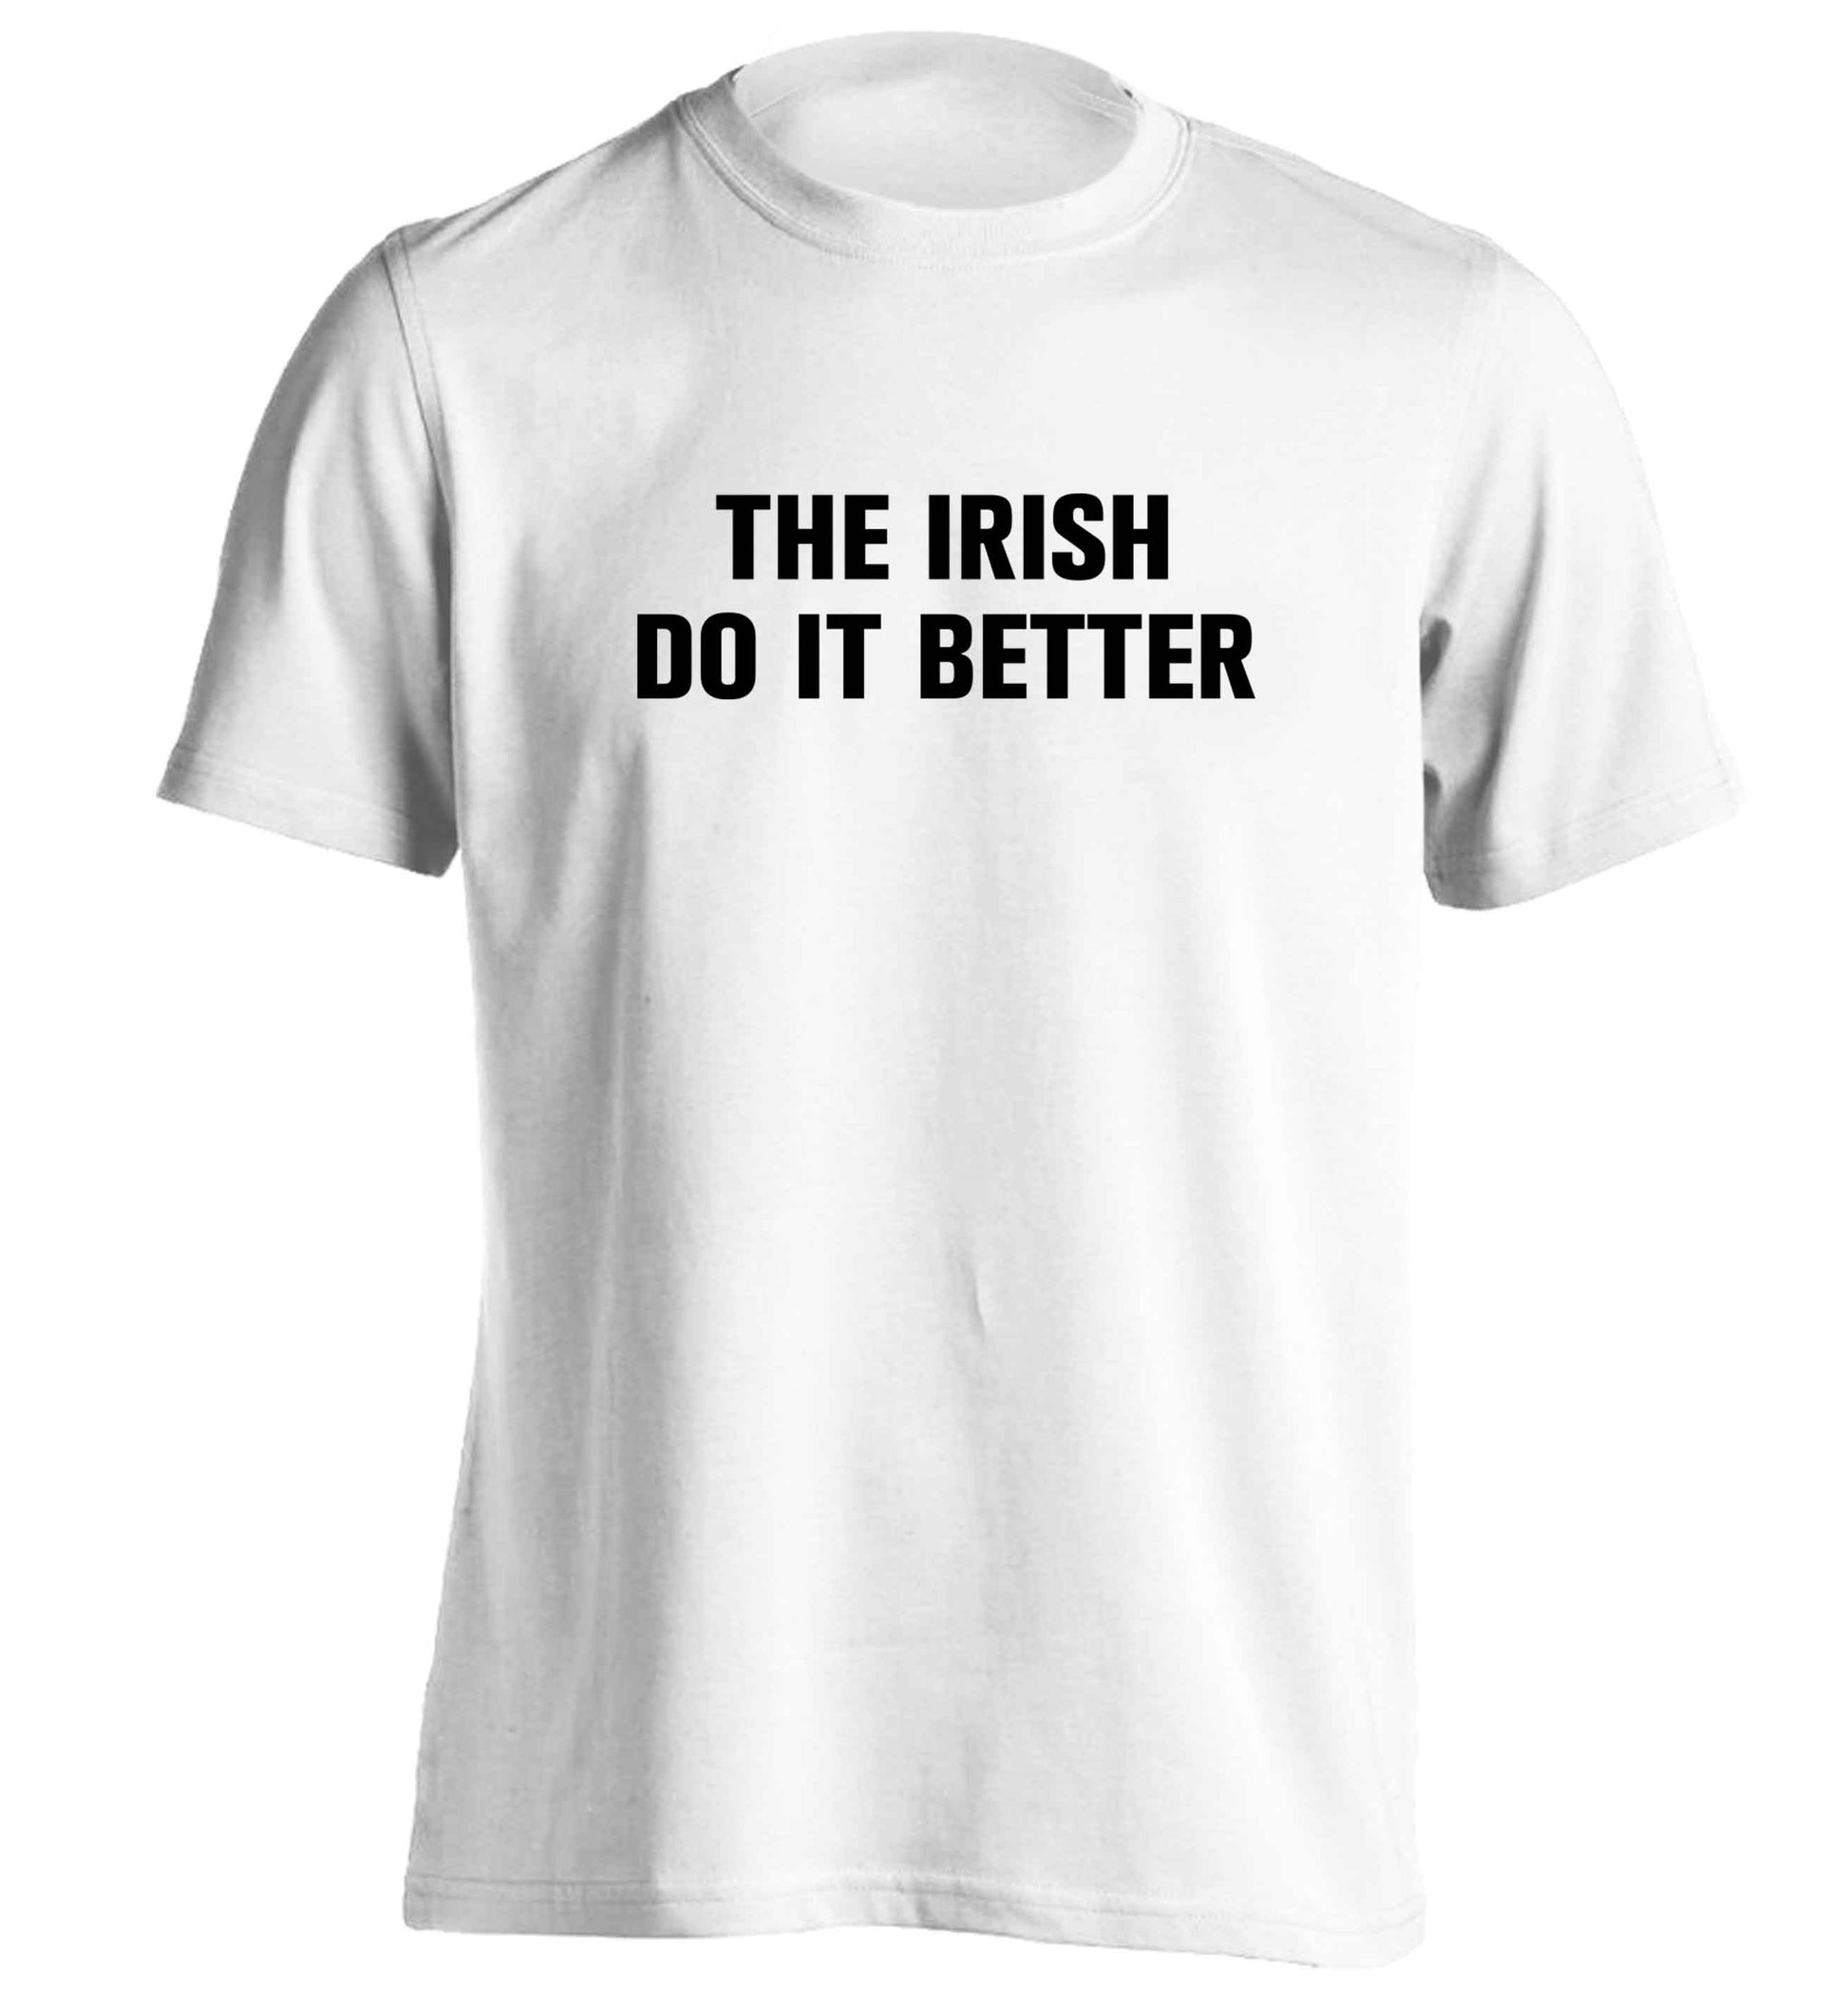 The Irish do it better adults unisex white Tshirt 2XL